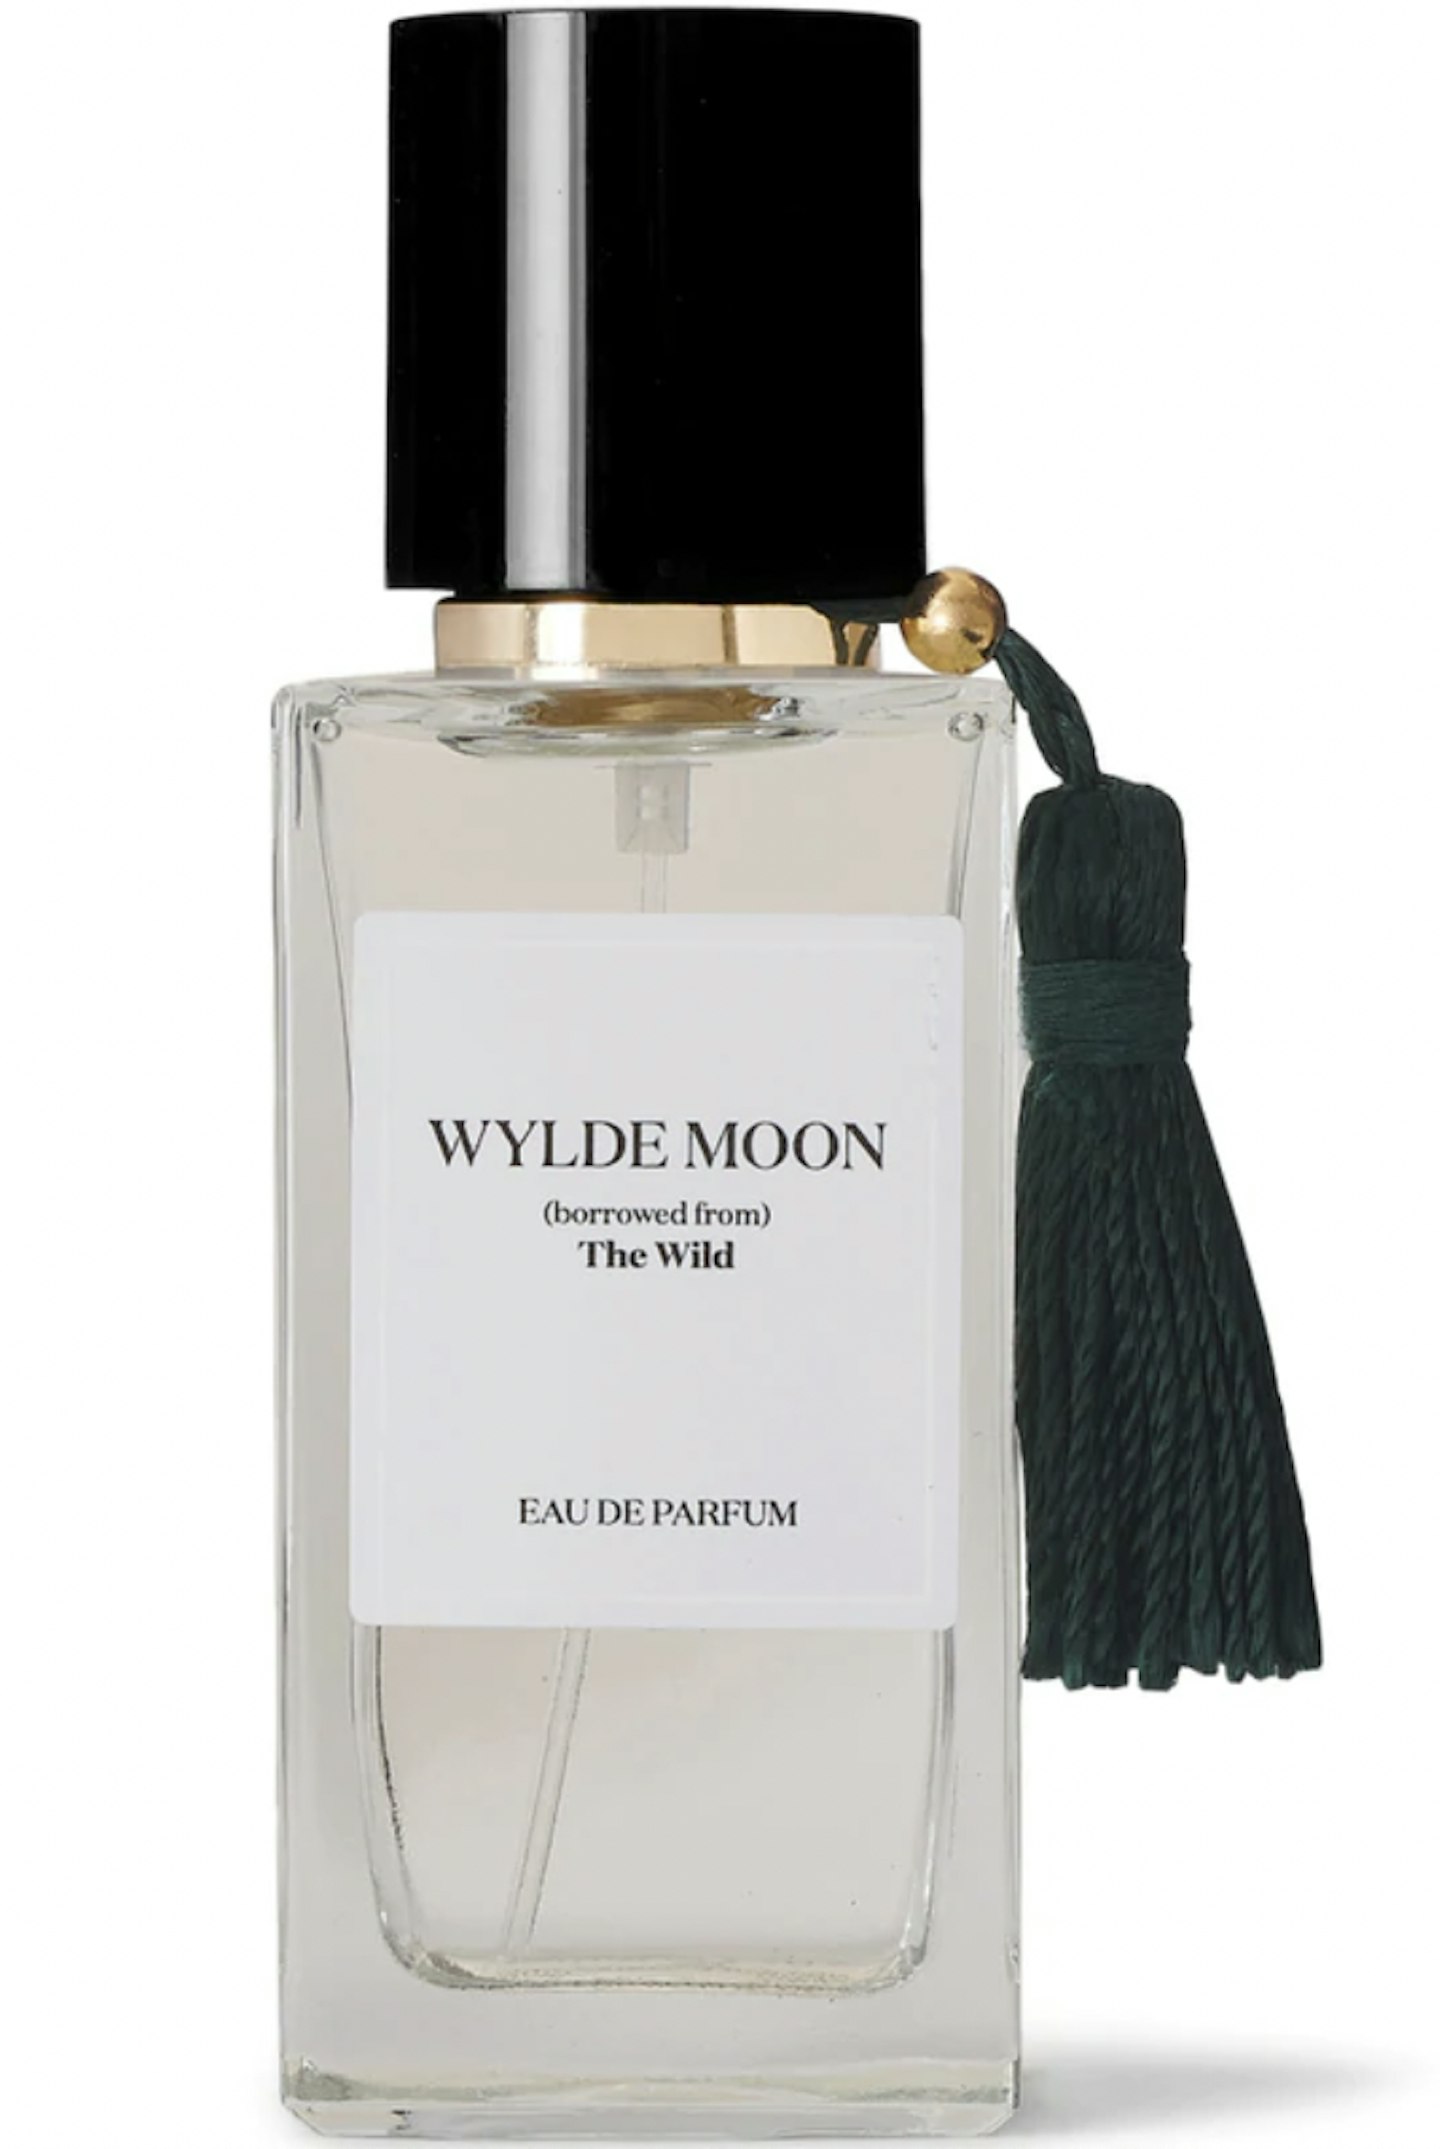 Wylde Moon, (borrowed from) The Wild, £42